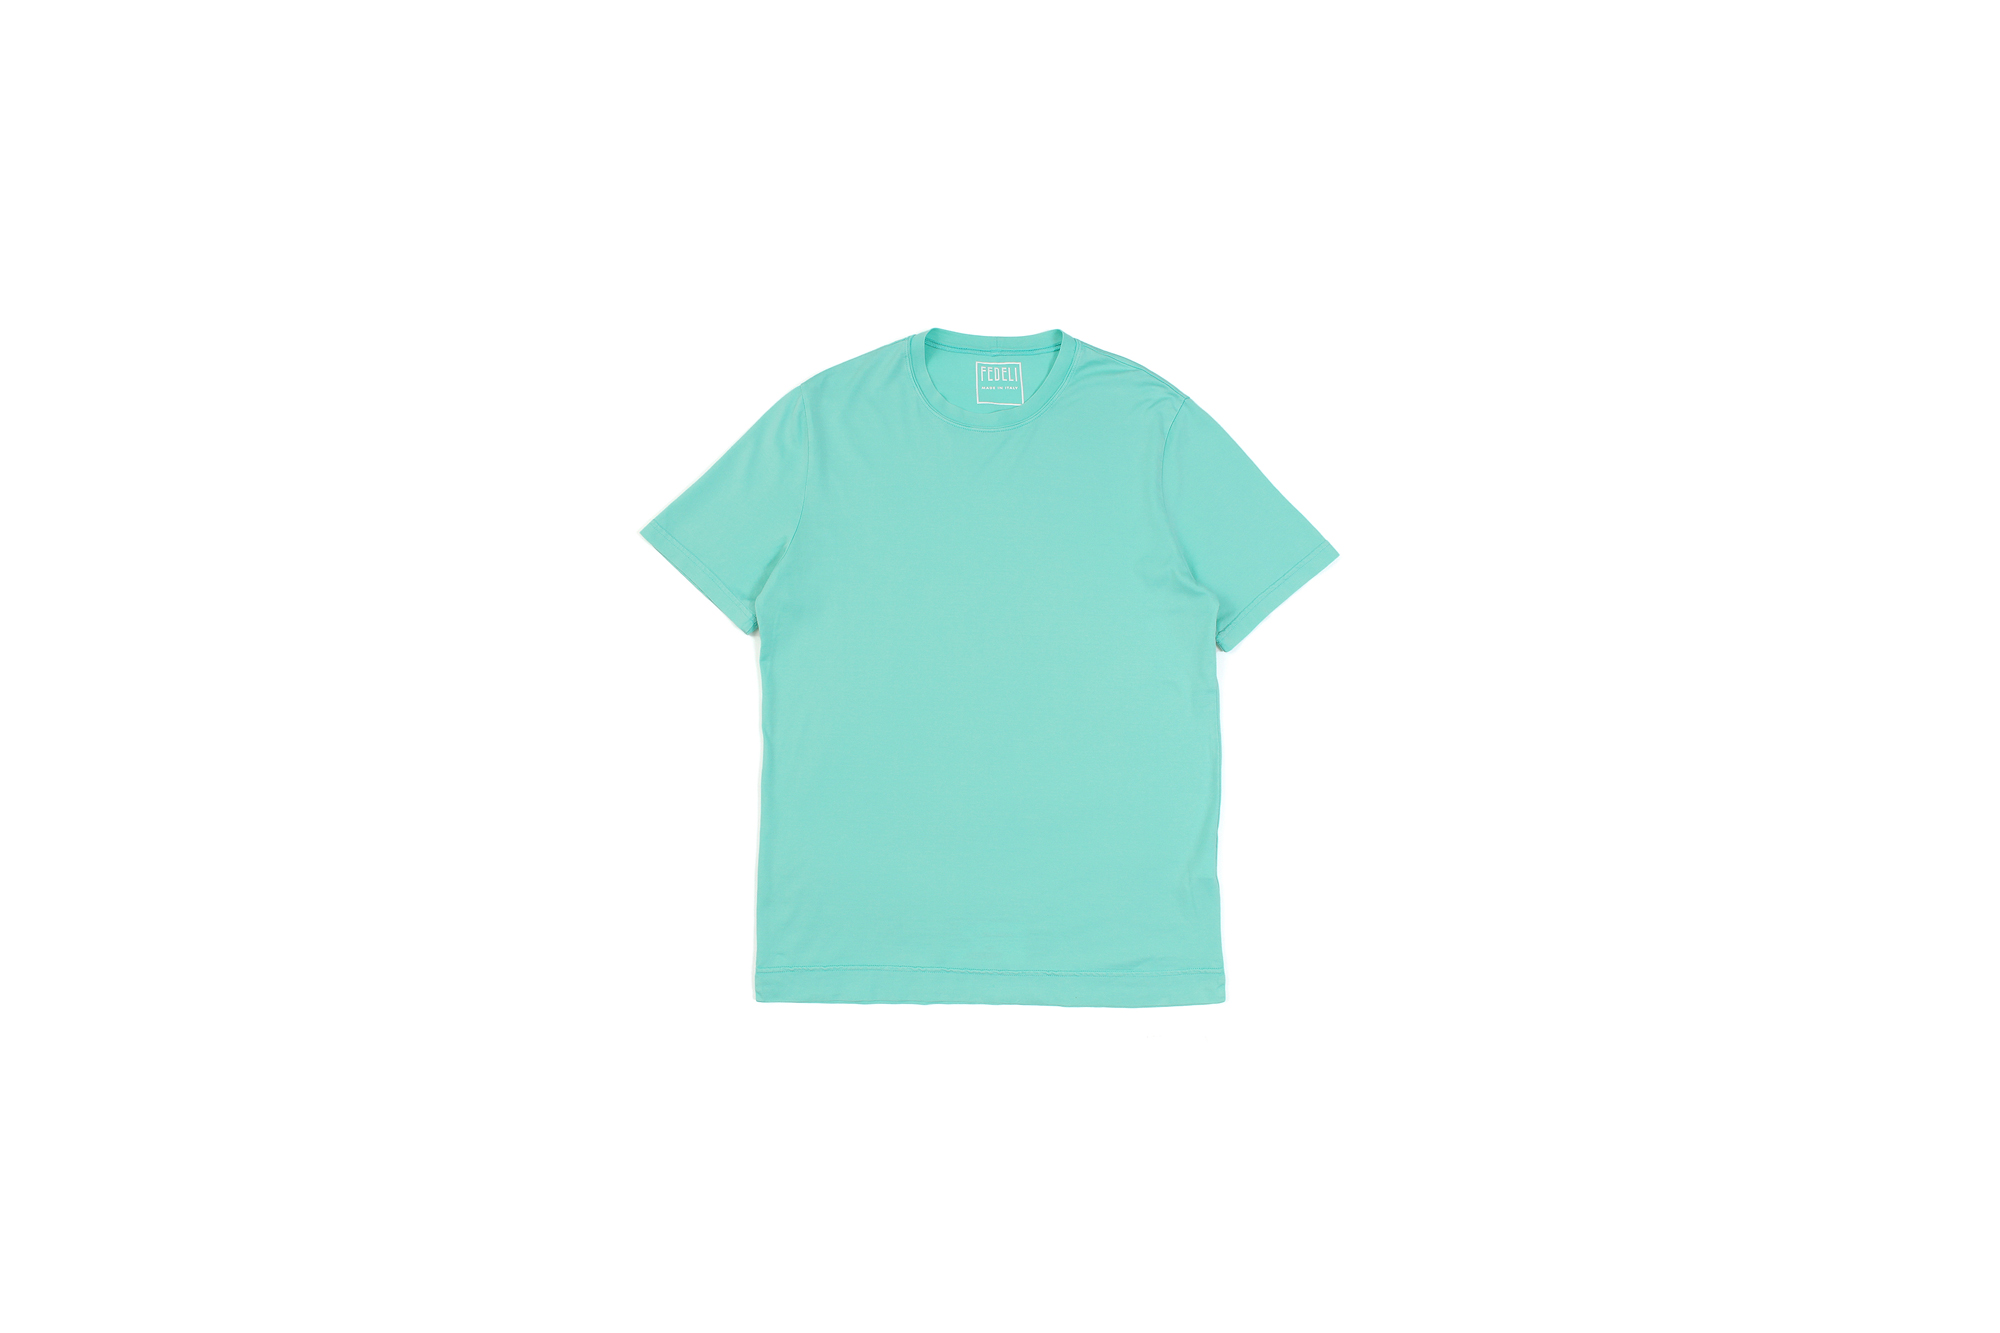 FEDELI(フェデーリ) Crew Neck T-shirt (クルーネック Tシャツ) ギザコットン Tシャツ BLUE (ブルー・66) made in italy (イタリア製) 2021 春夏 【Special Color】【ご予約開始】愛知 名古屋 altoediritto アルトエデリット スペシャルモデル TEE 半袖Ｔシャツ